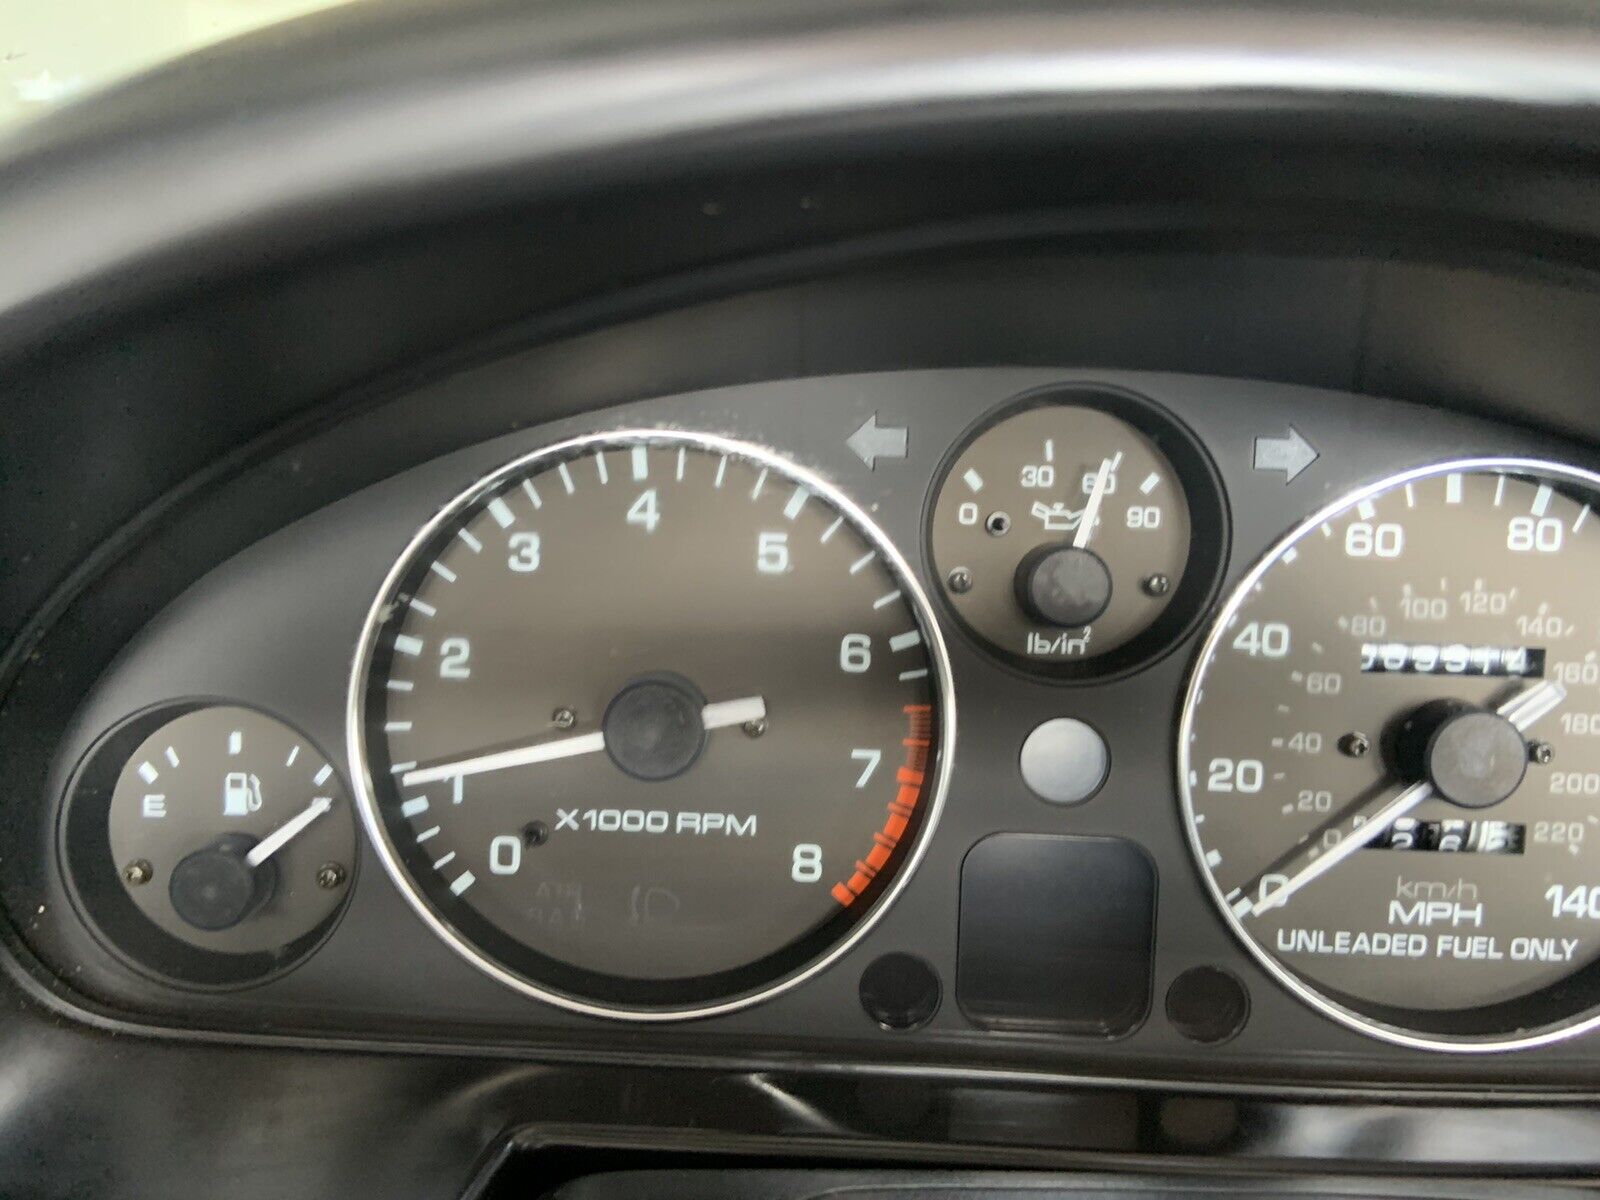 1991 MIATA Mazda RED CONVERTIBLE,5 speed, great condition,69k miles, garage kept